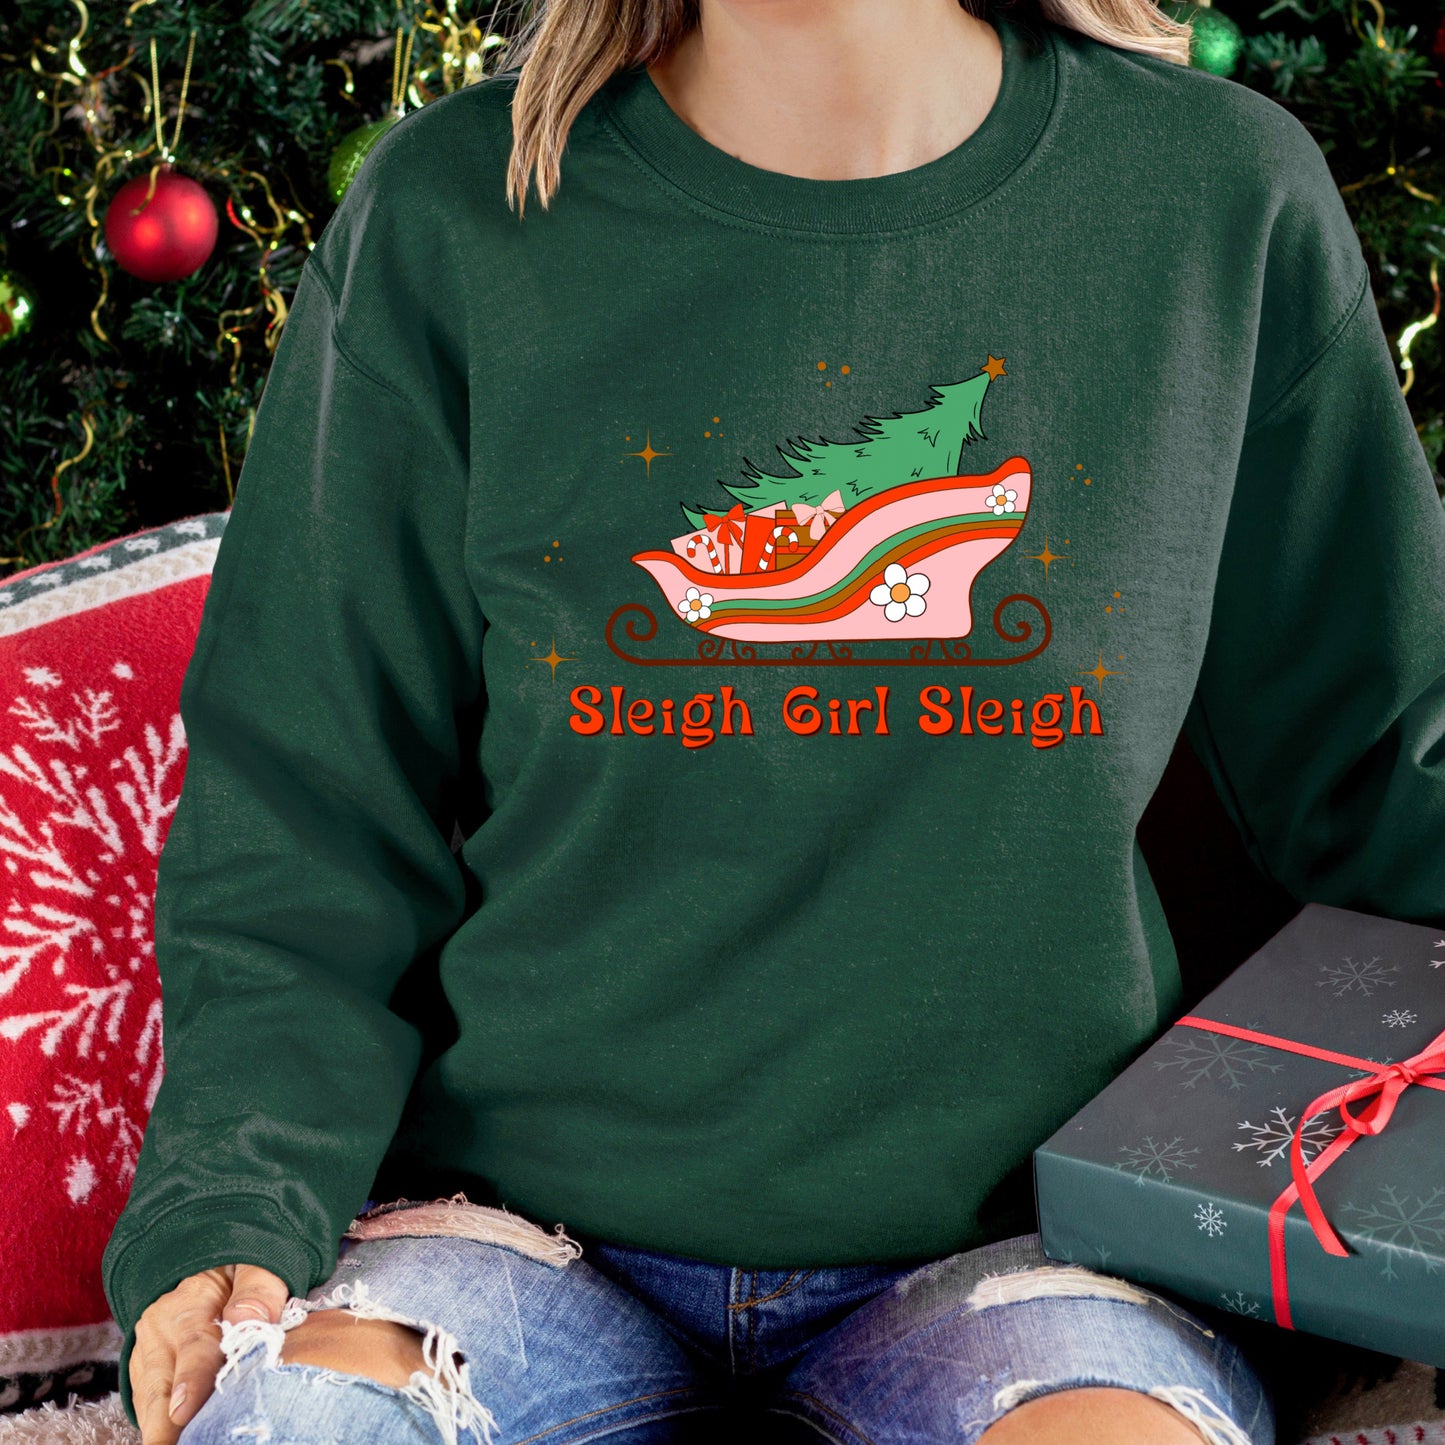 "Sleigh girl sleigh" Christmas iron on heat transfer.